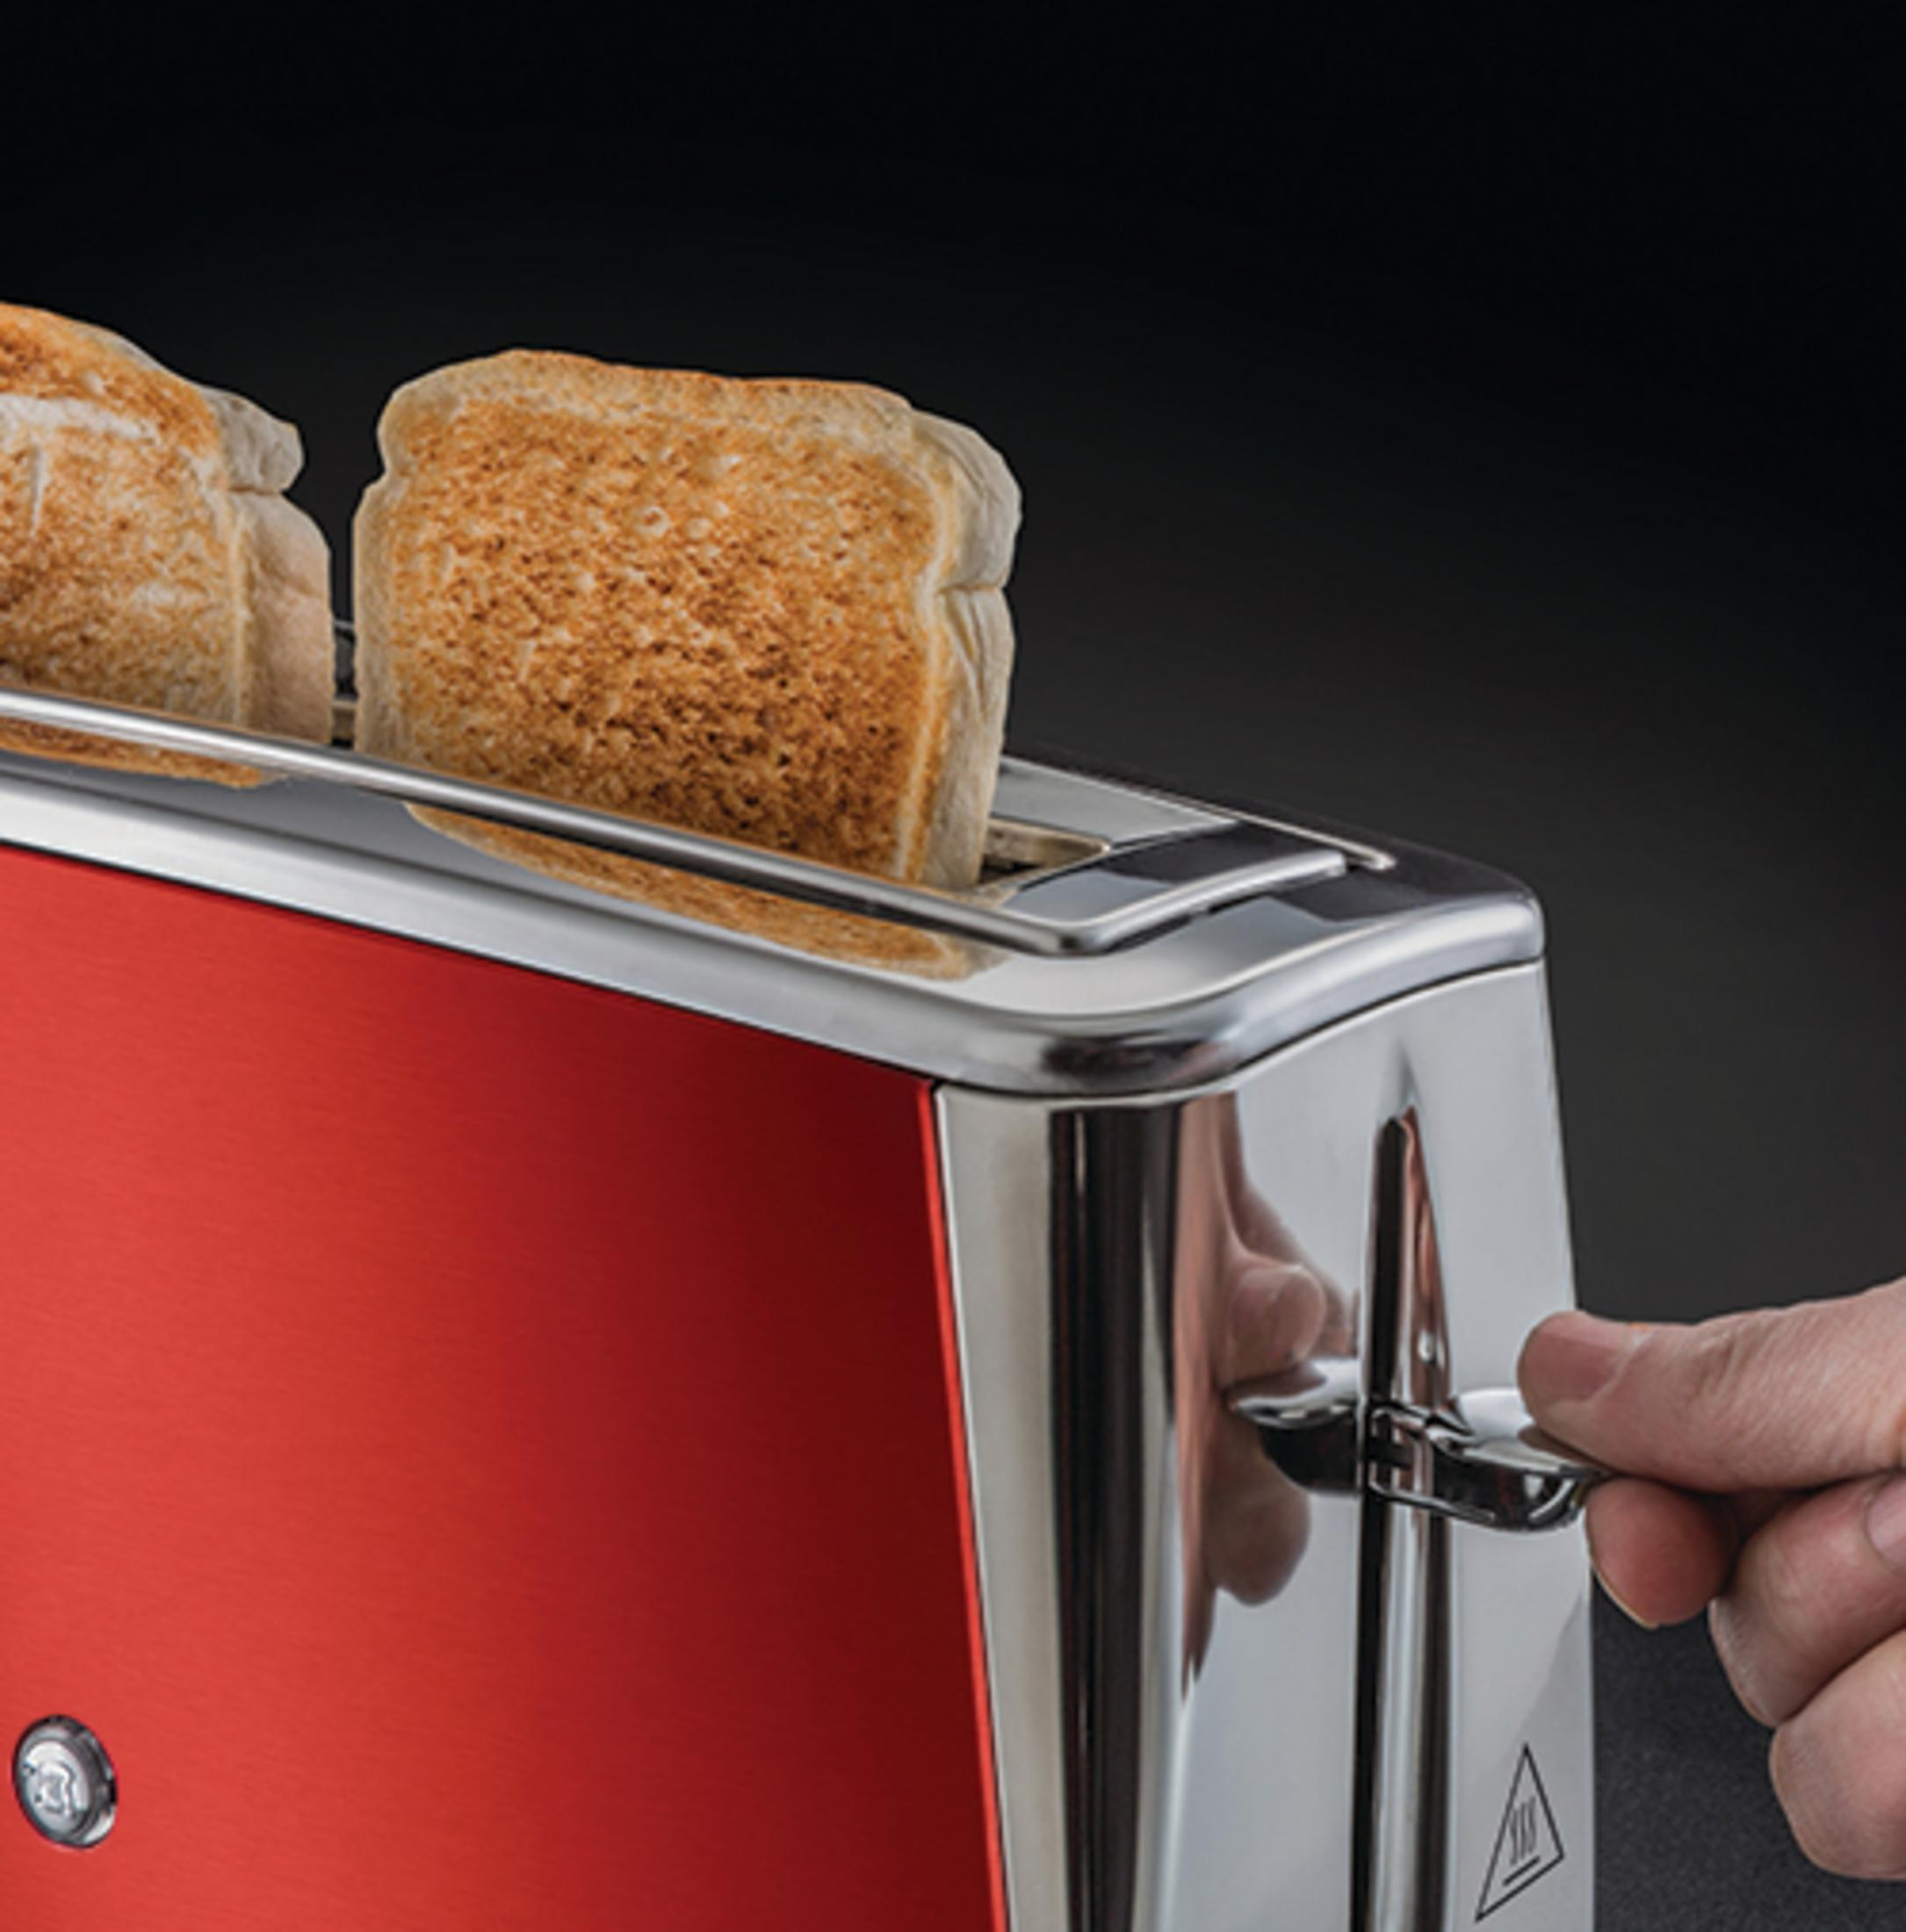 LUNA Schlitze: Toaster LANGSCHL. HOBBS RUSSELL 1) RED Edelstahl/Rot 23250-56 Watt, (1420 SOLAR RH